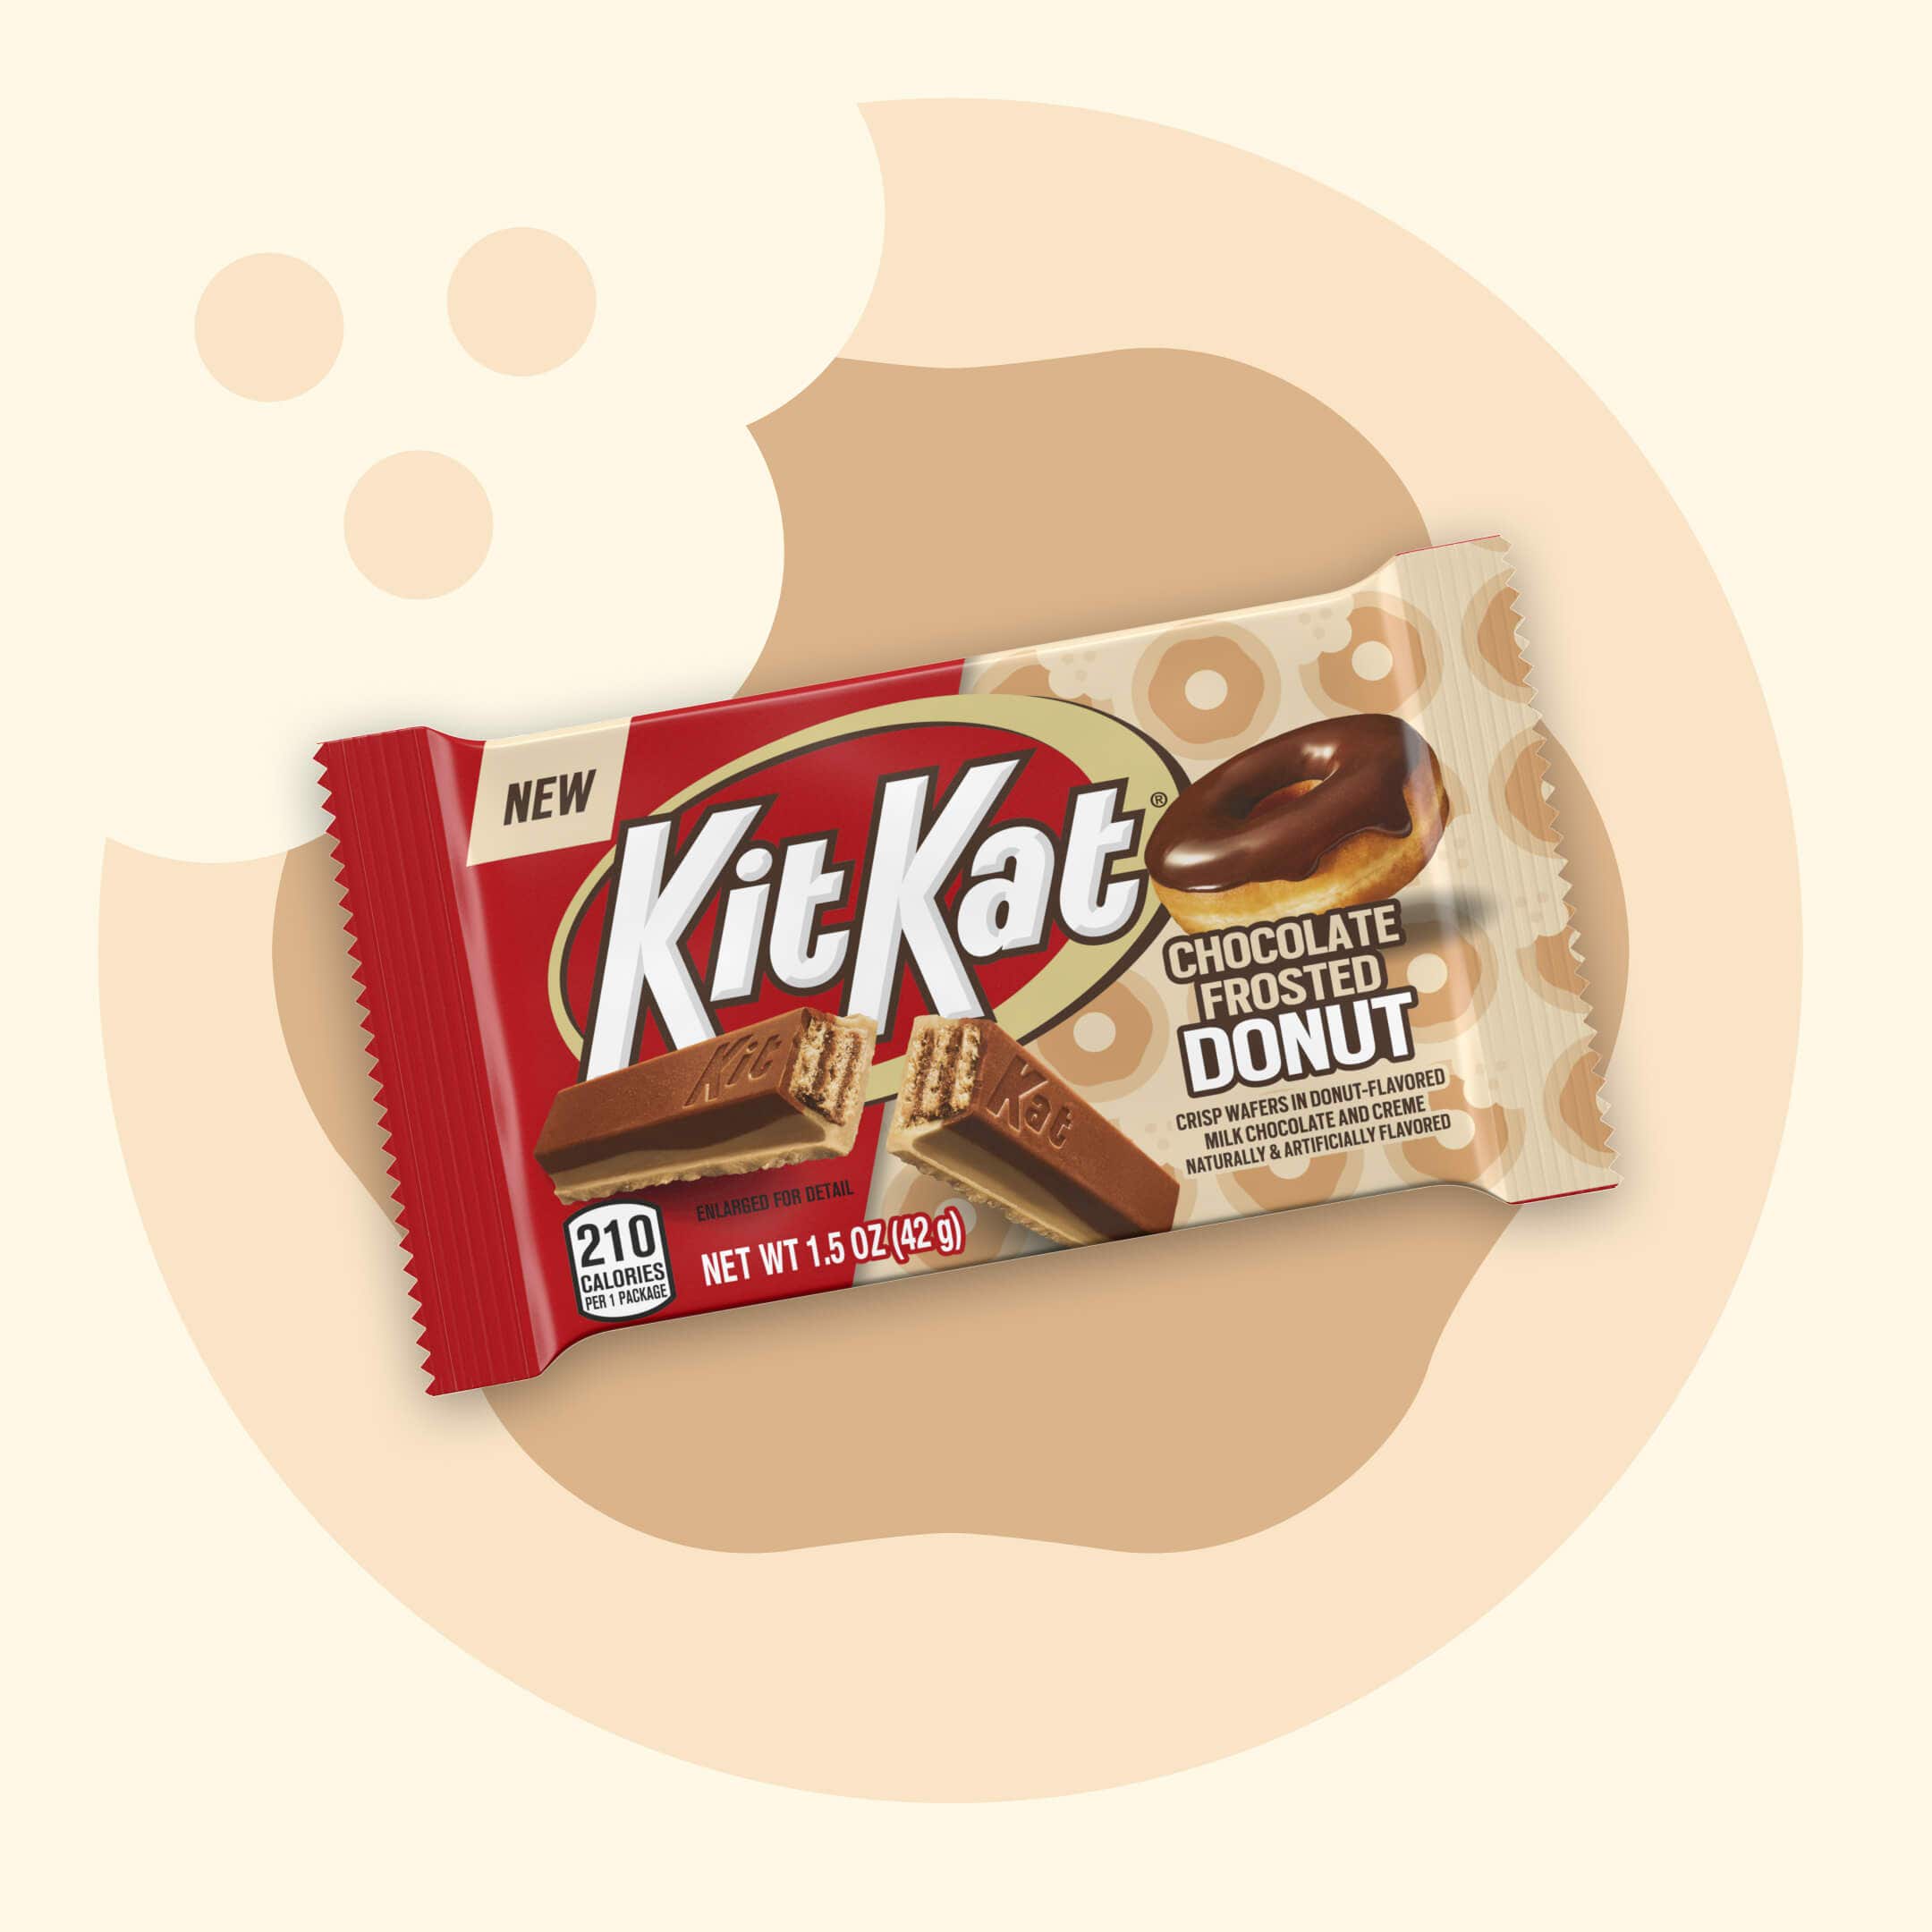 Kit Kat Candy, Bar Milk Chocolate Wafer